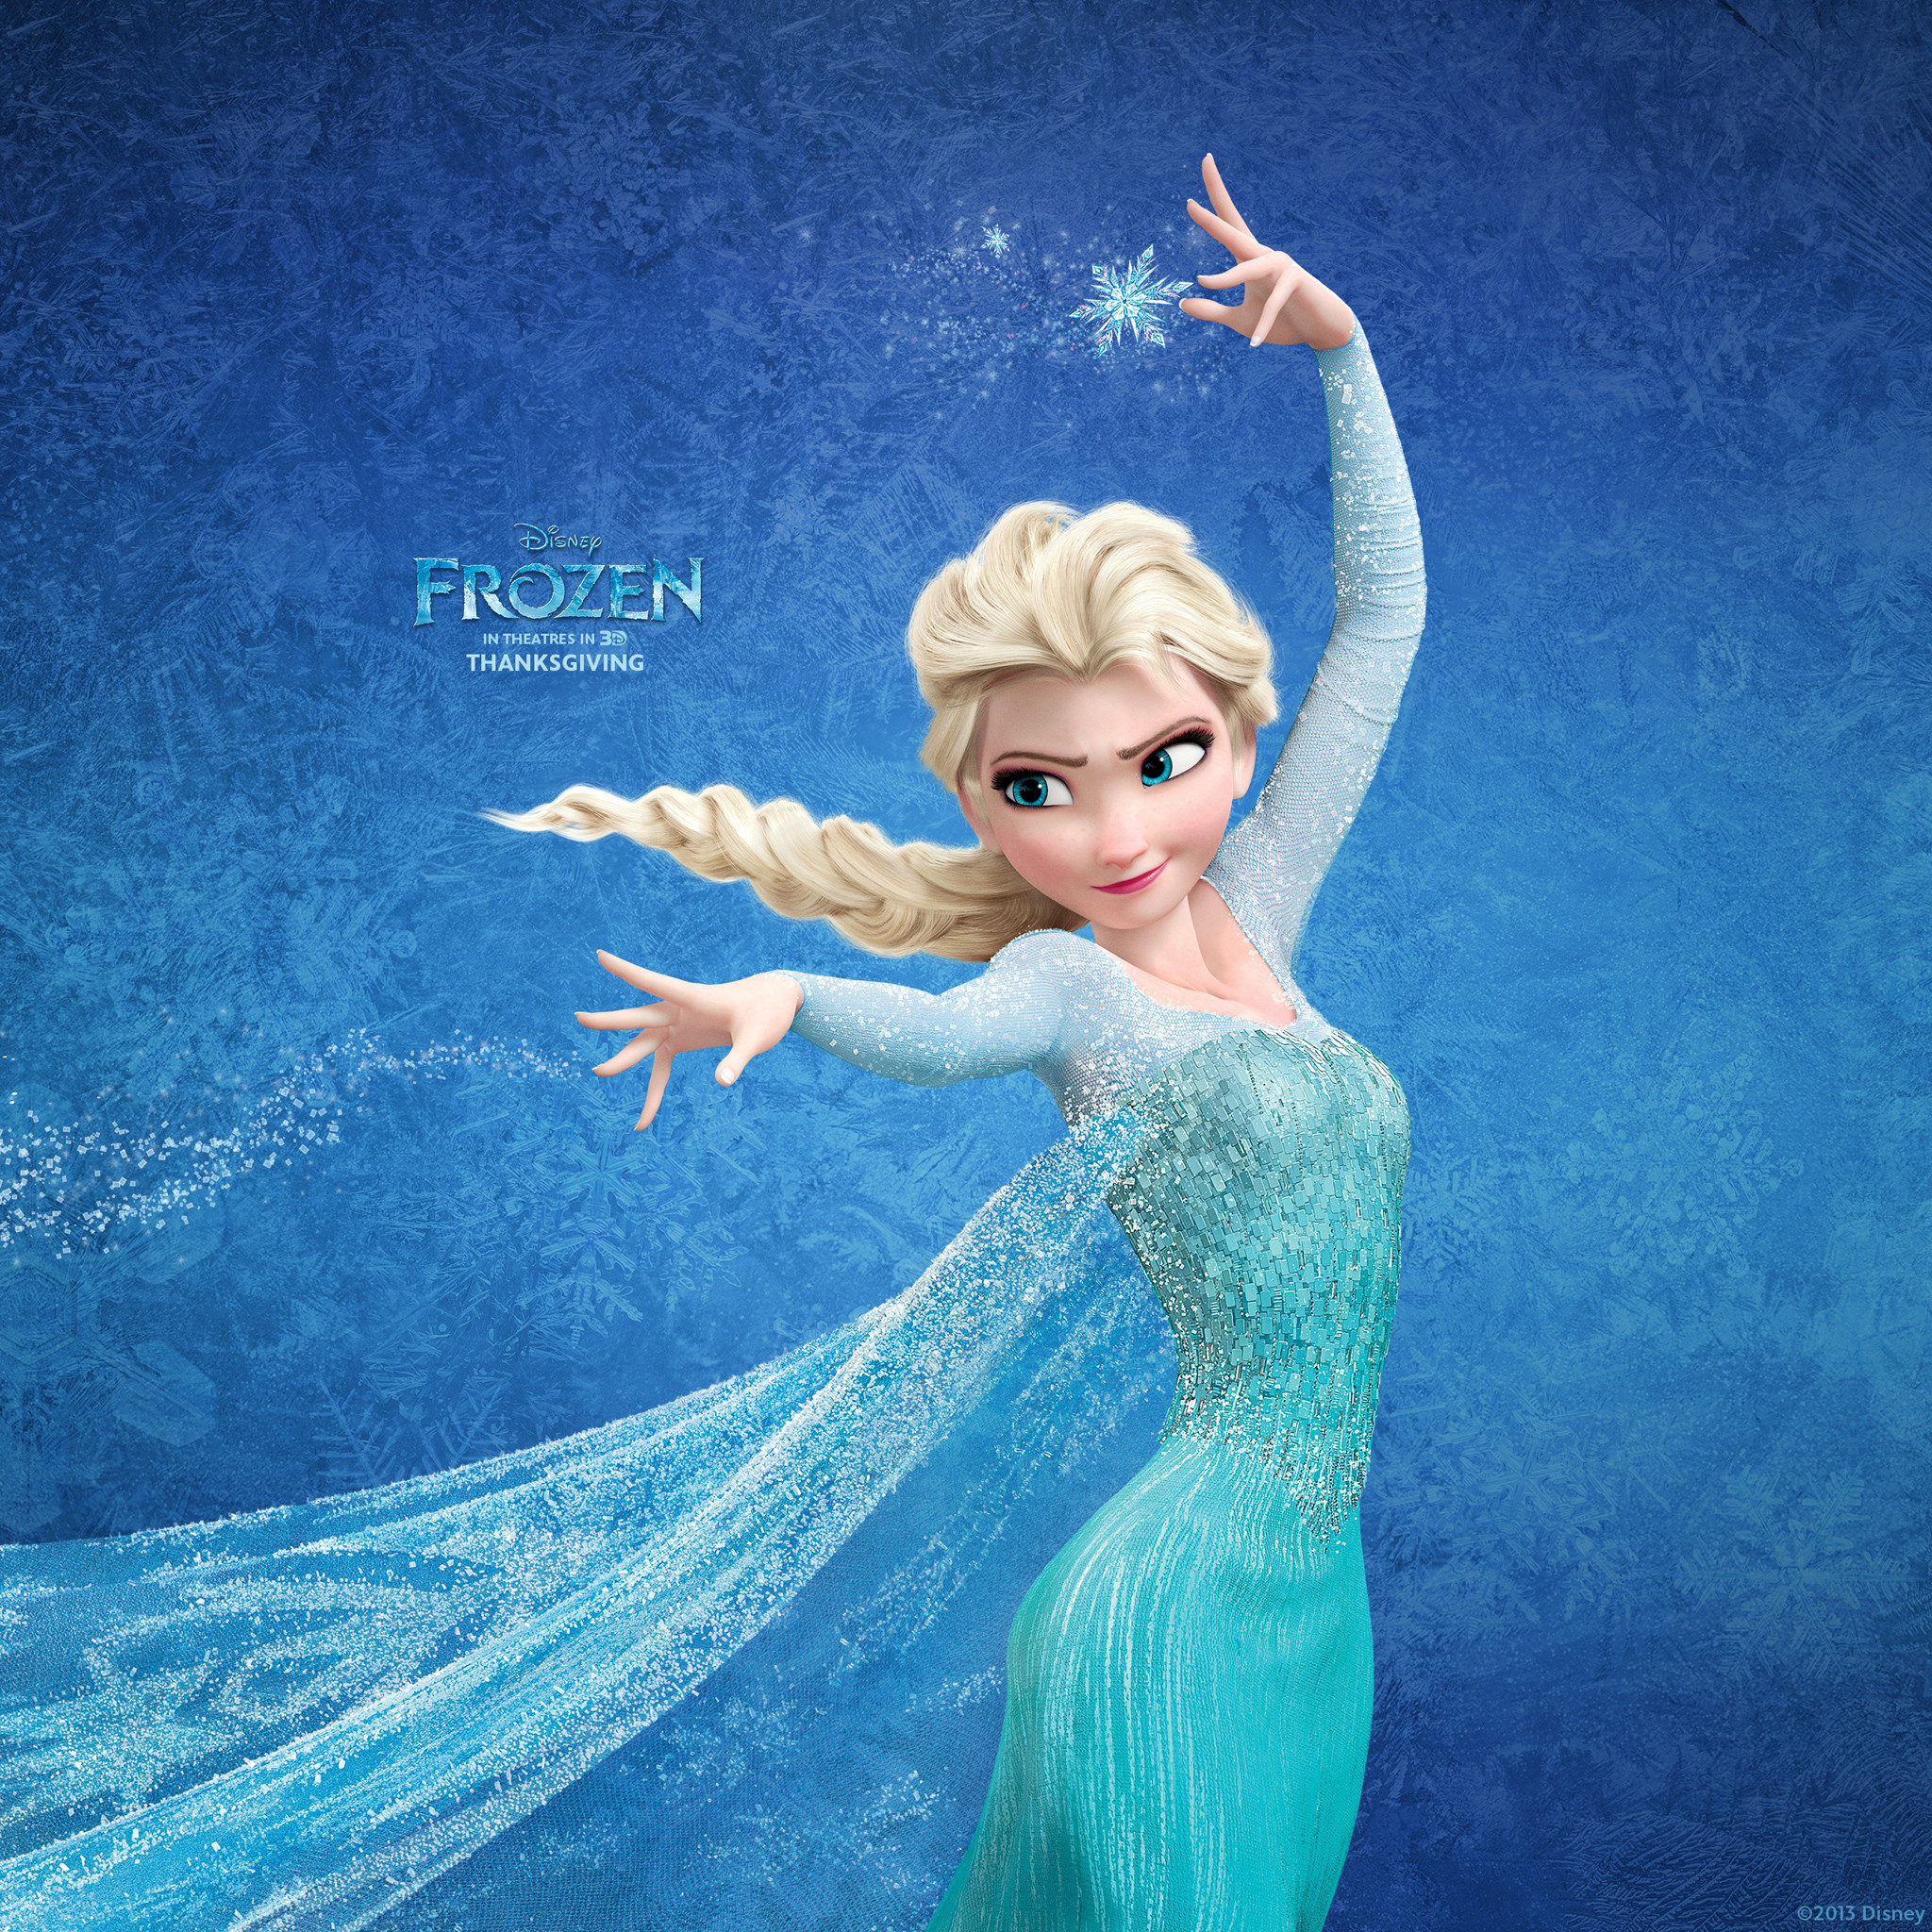 Queen Elsa Frozen Movie Wallpaper 737 Frenzia Com Ipad タブレット壁紙ギャラリー